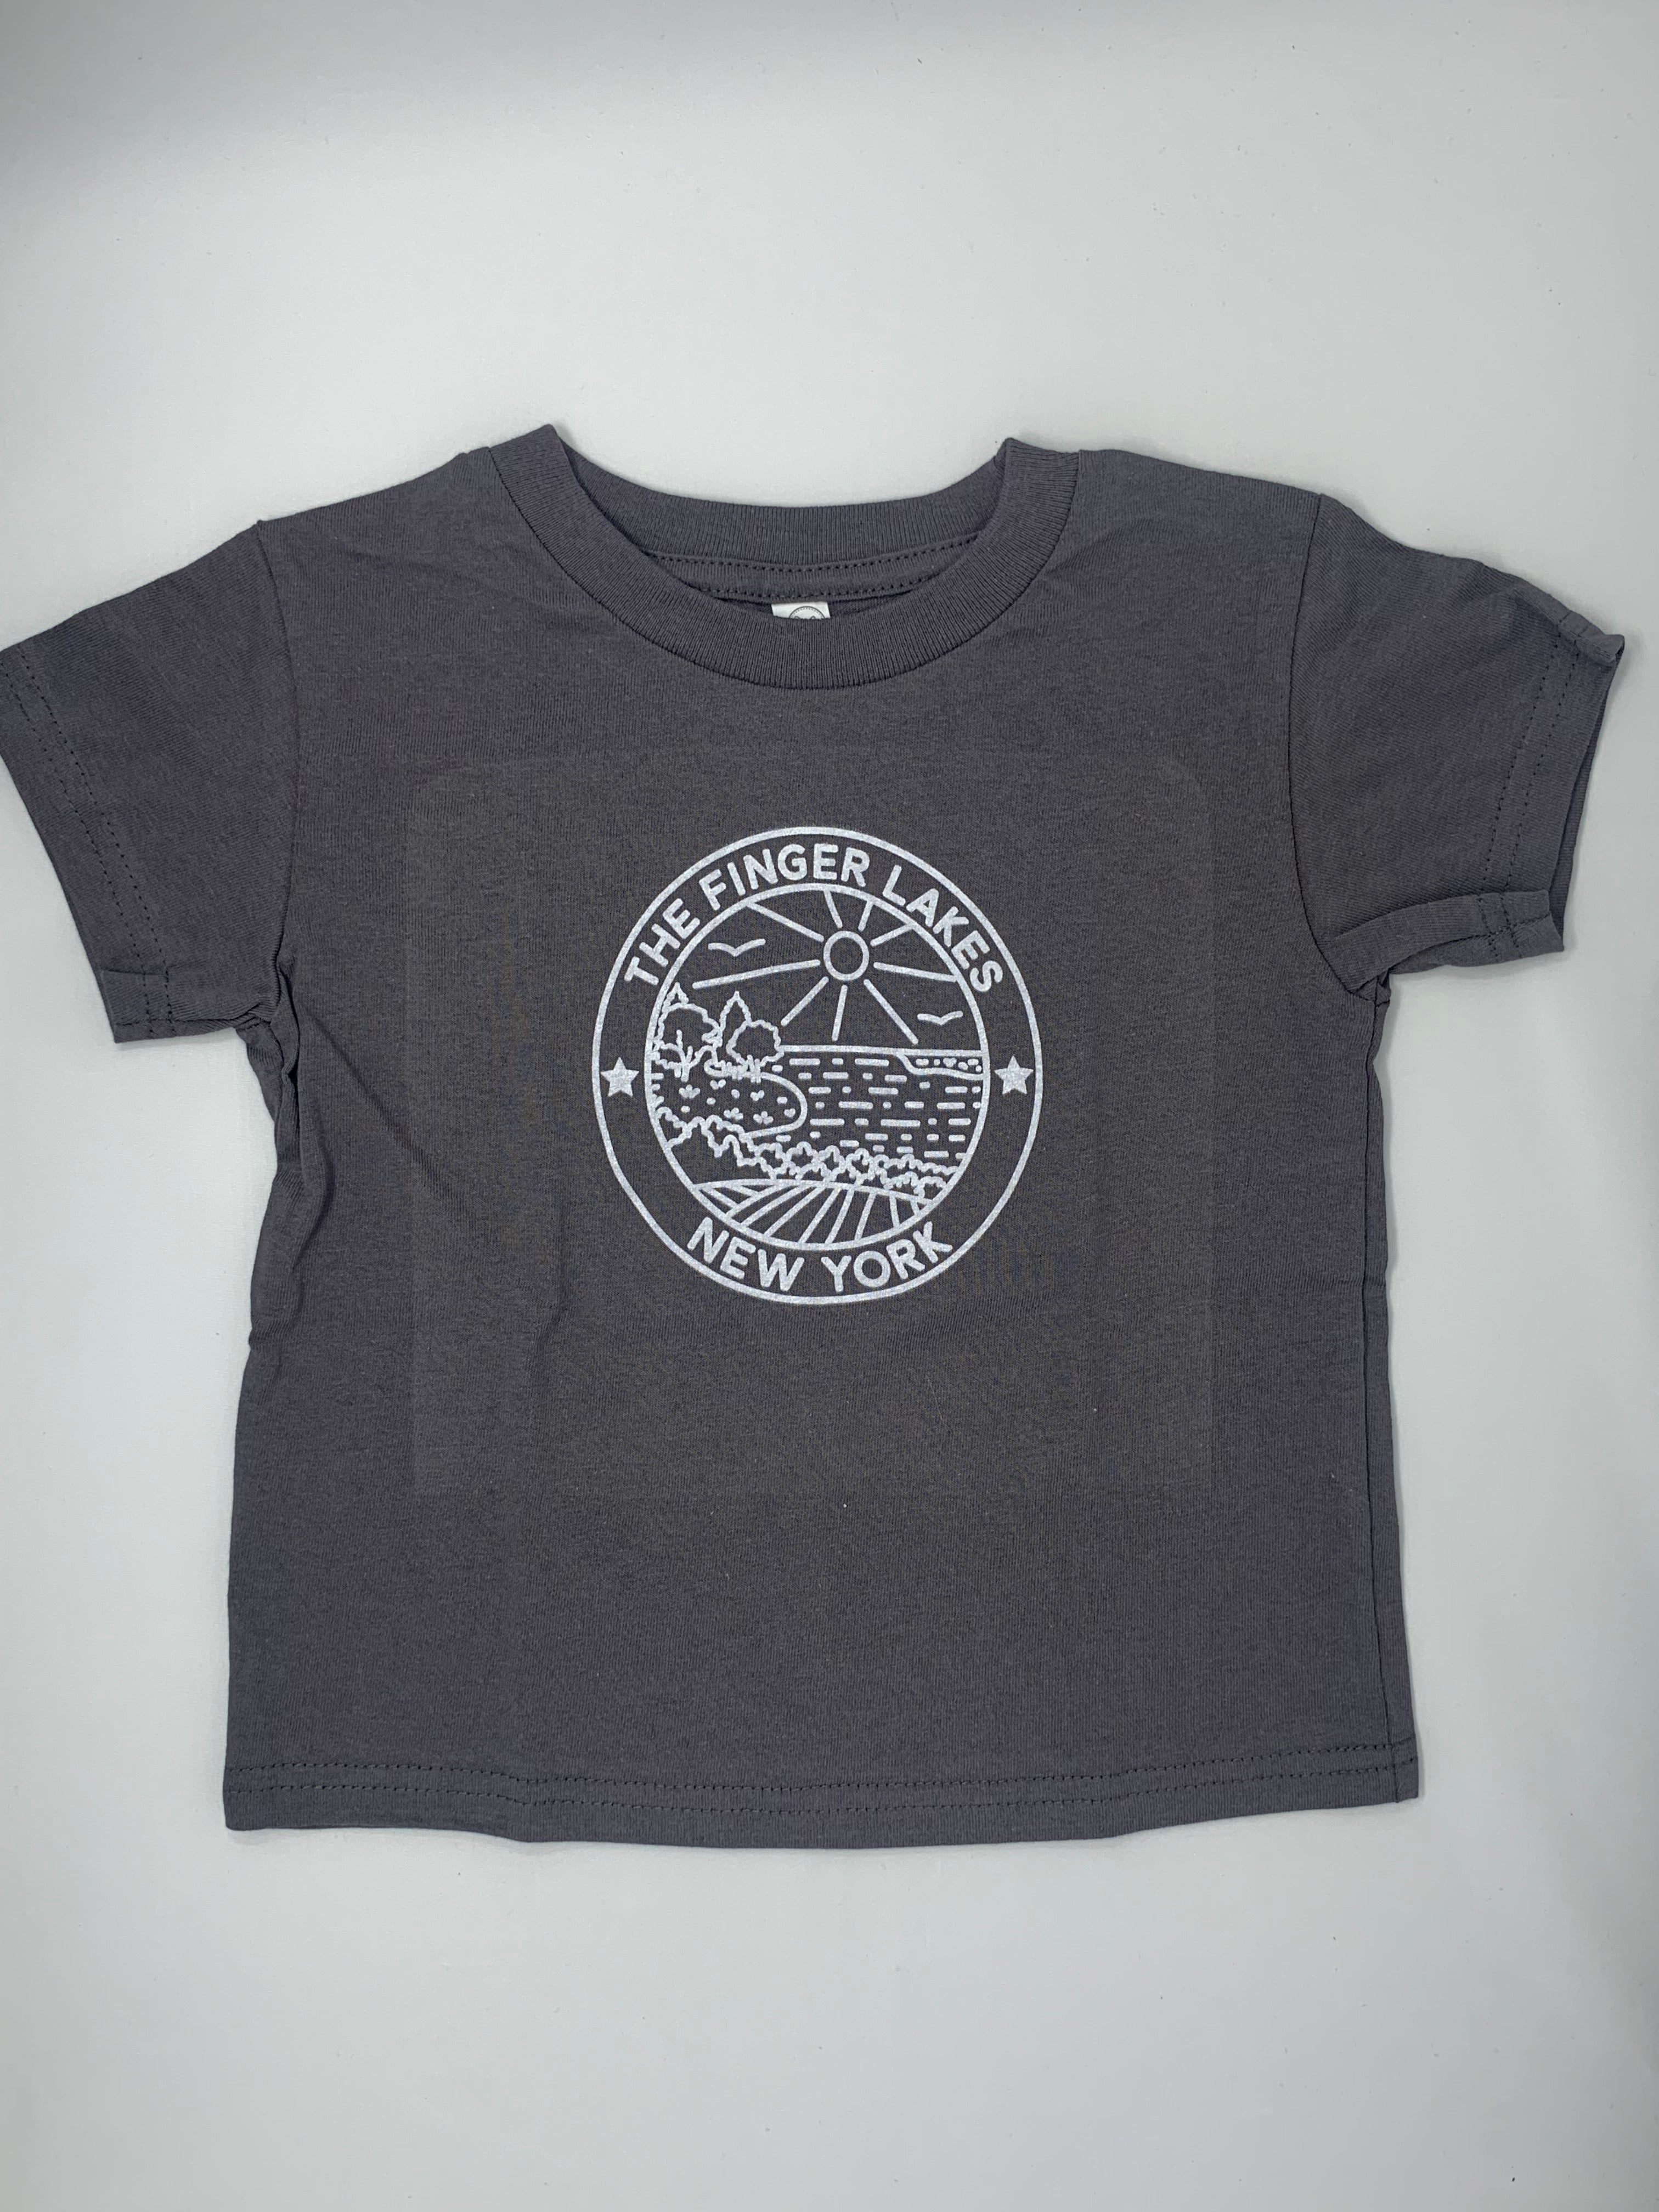 The Finger Lakes Toddler T-Shirt